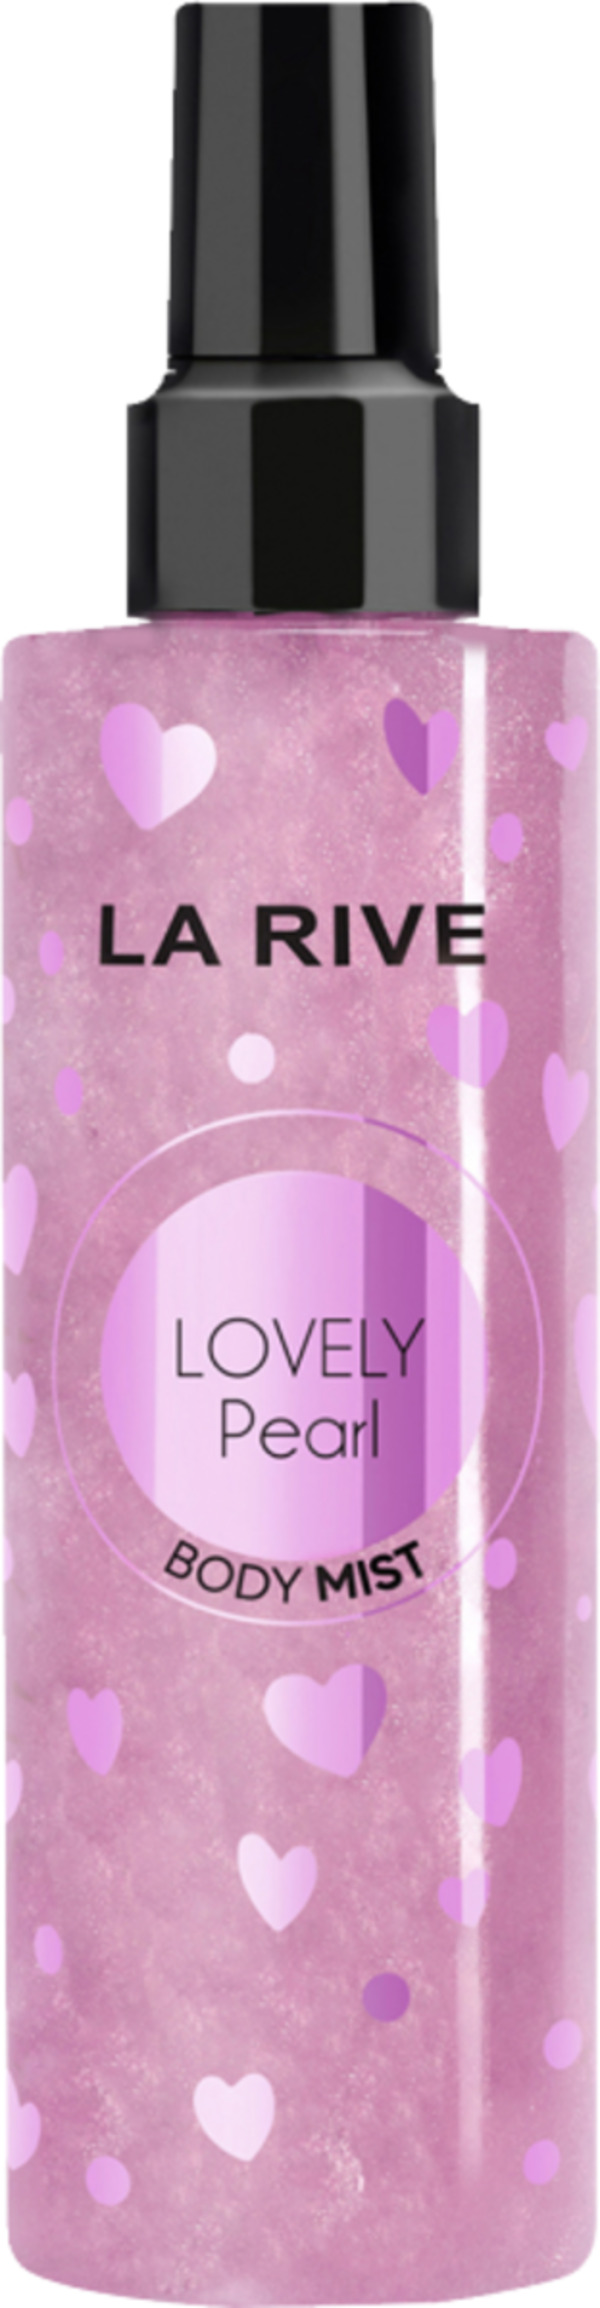 Bild 1 von LA RIVE Lovely Pearl, Body Mist 200 ml